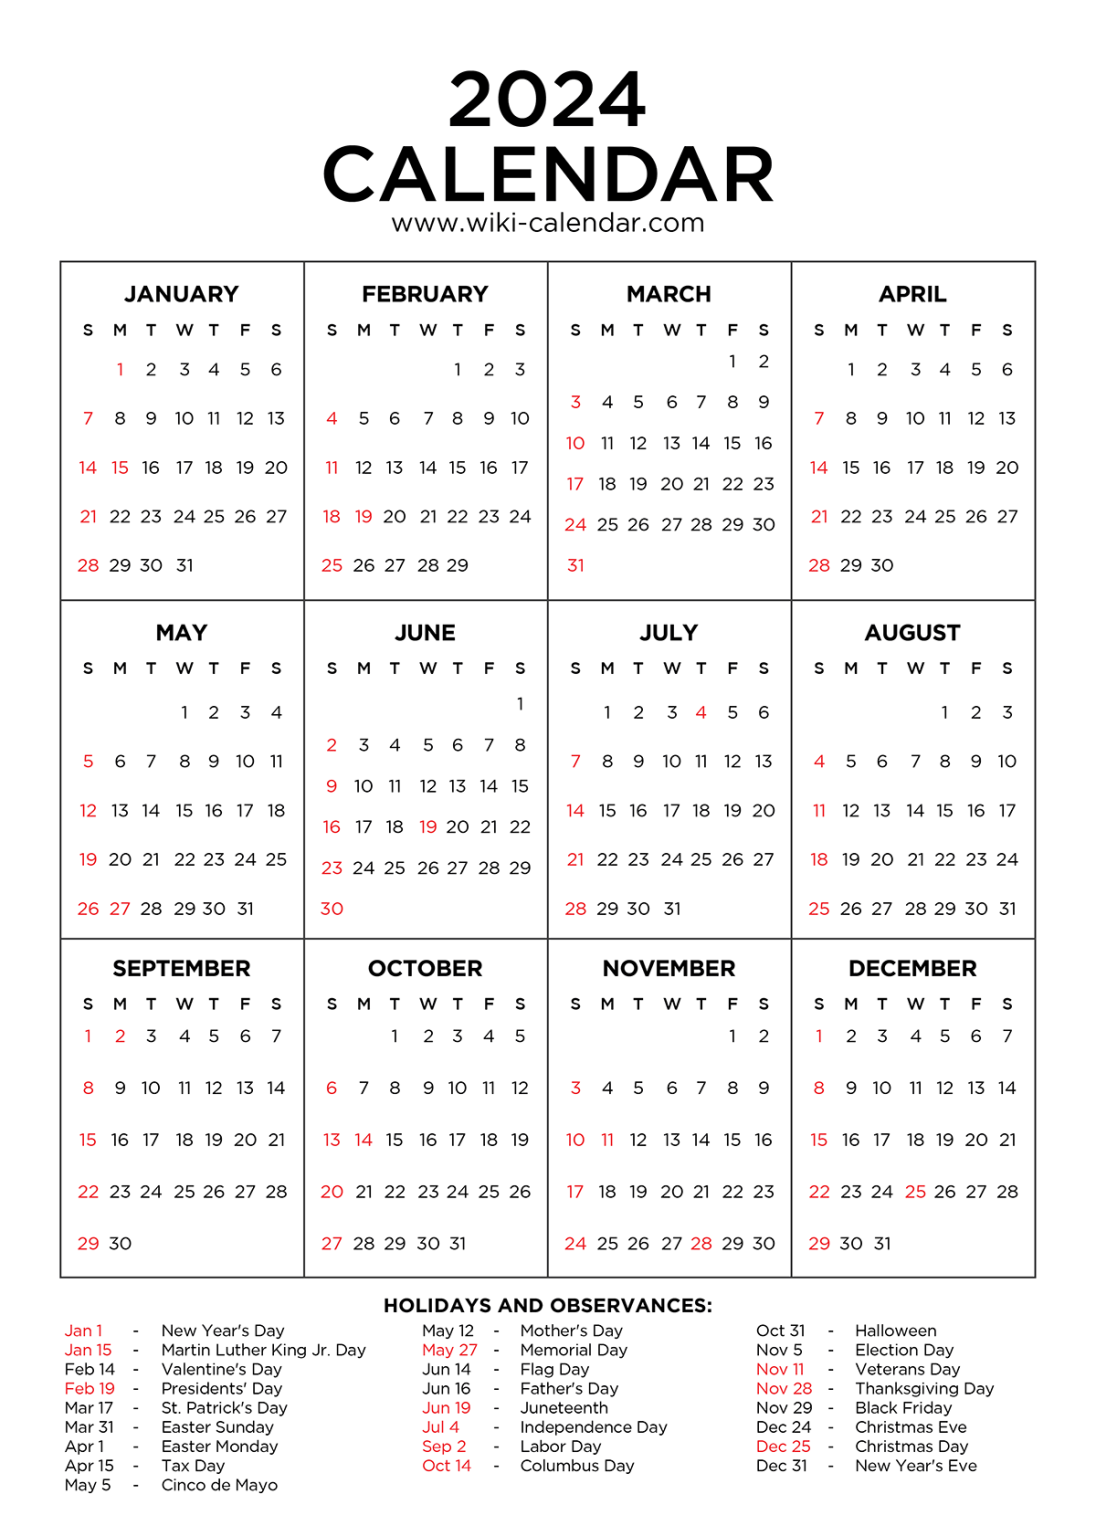 Year 2024 Calendar Printable With Holidays Wiki Calendar - Free Printable 2024 Calendar With Holidays